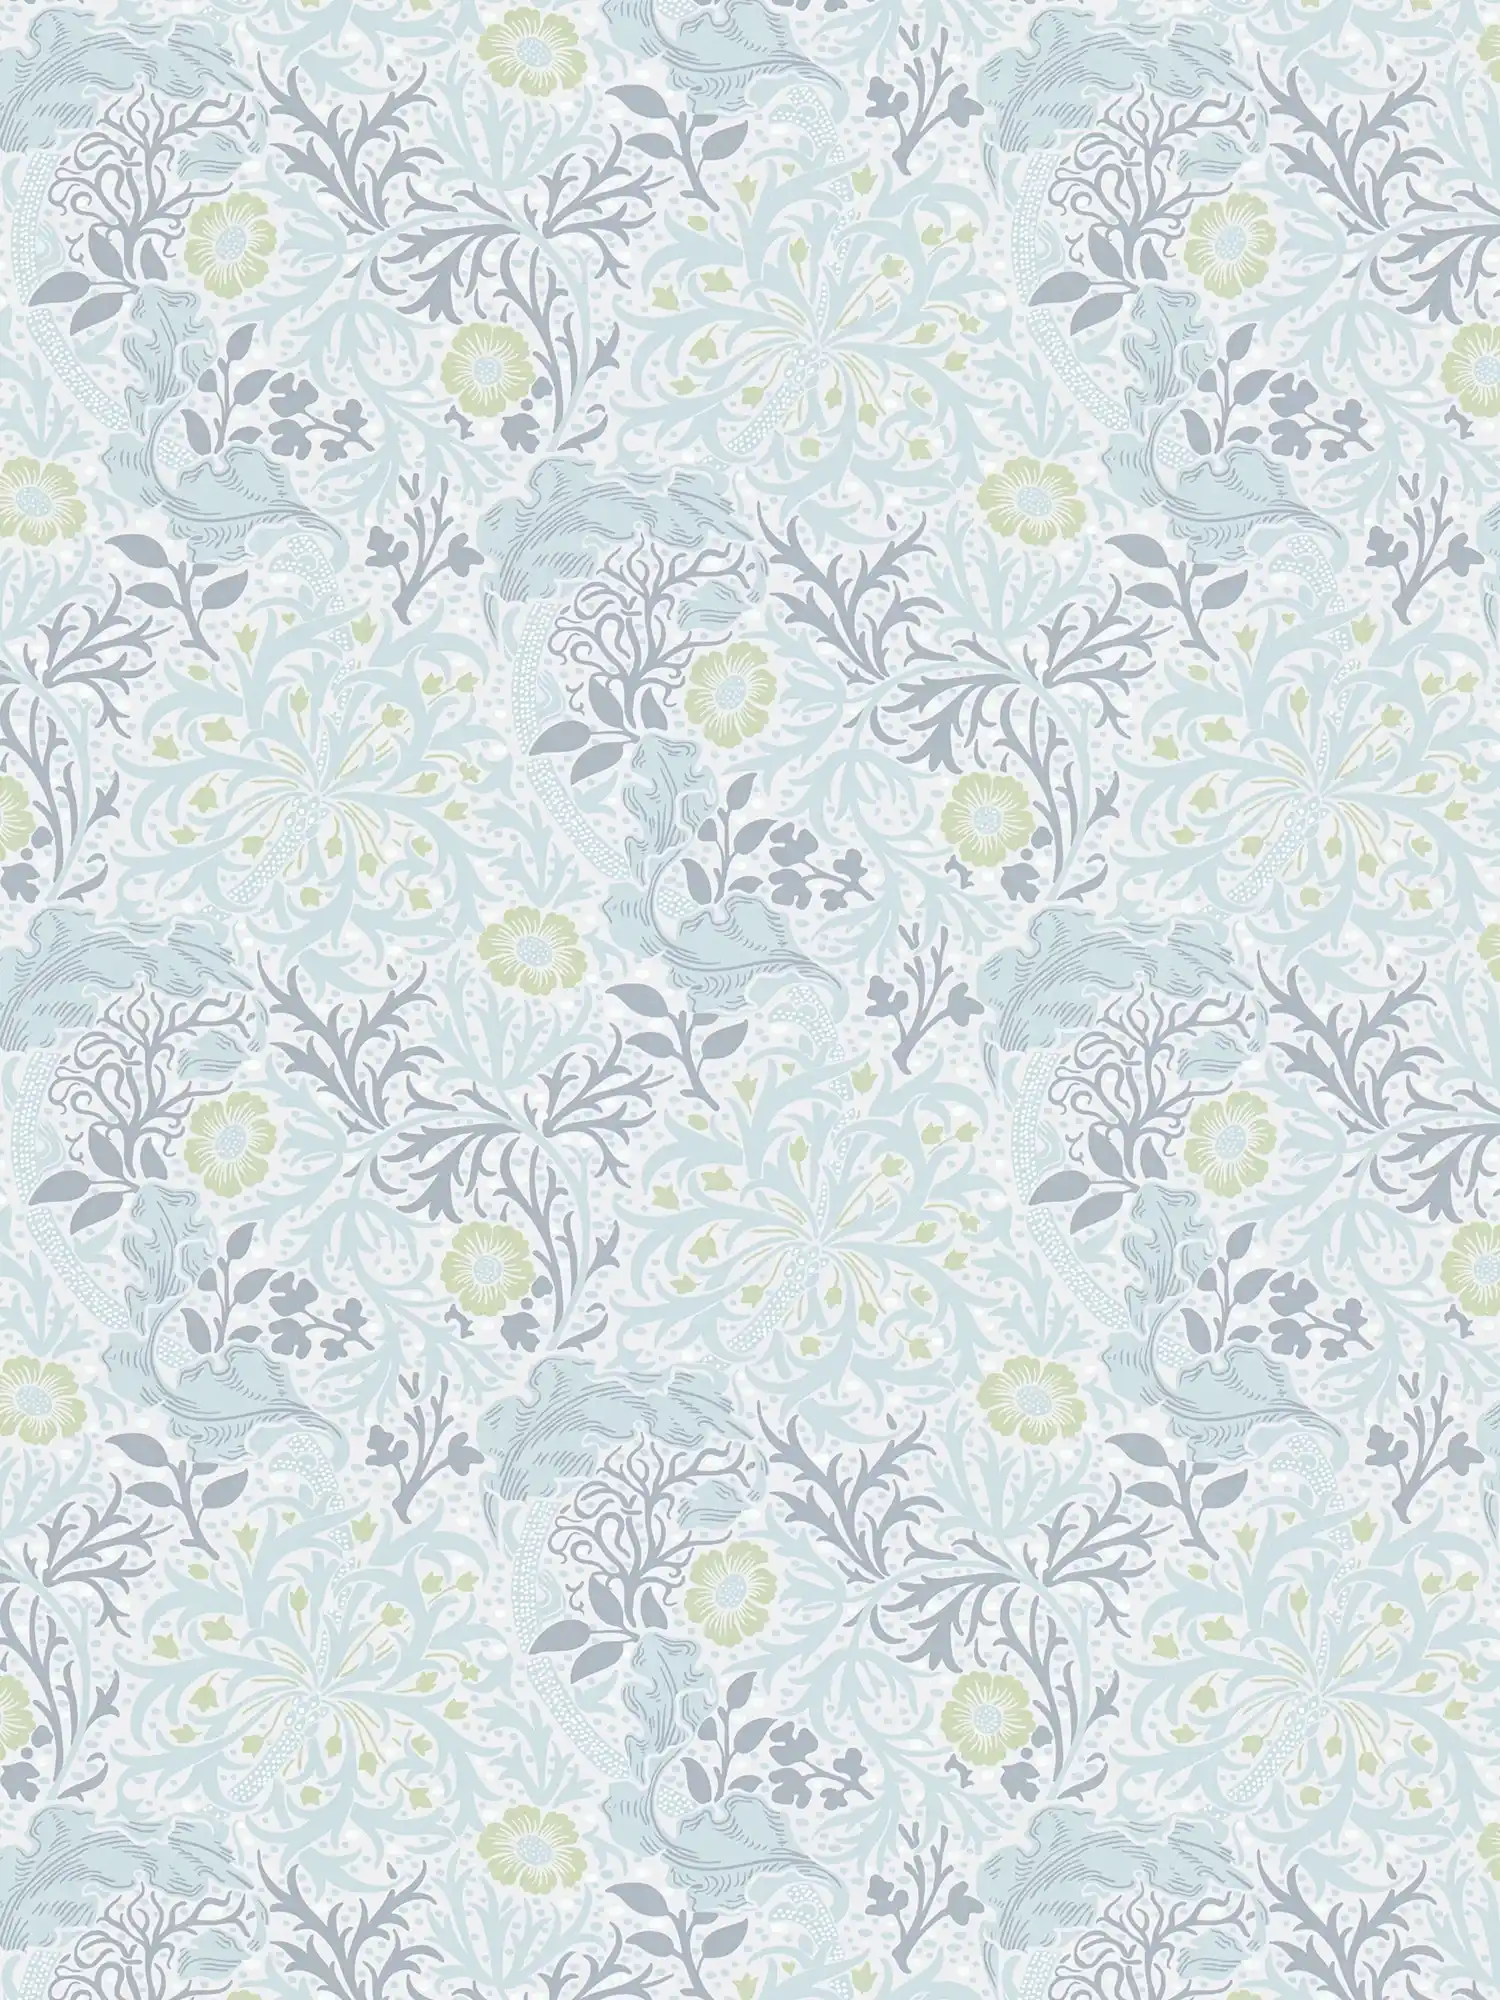 Nature design leaves & flowers wallpaper - grey, green, white
